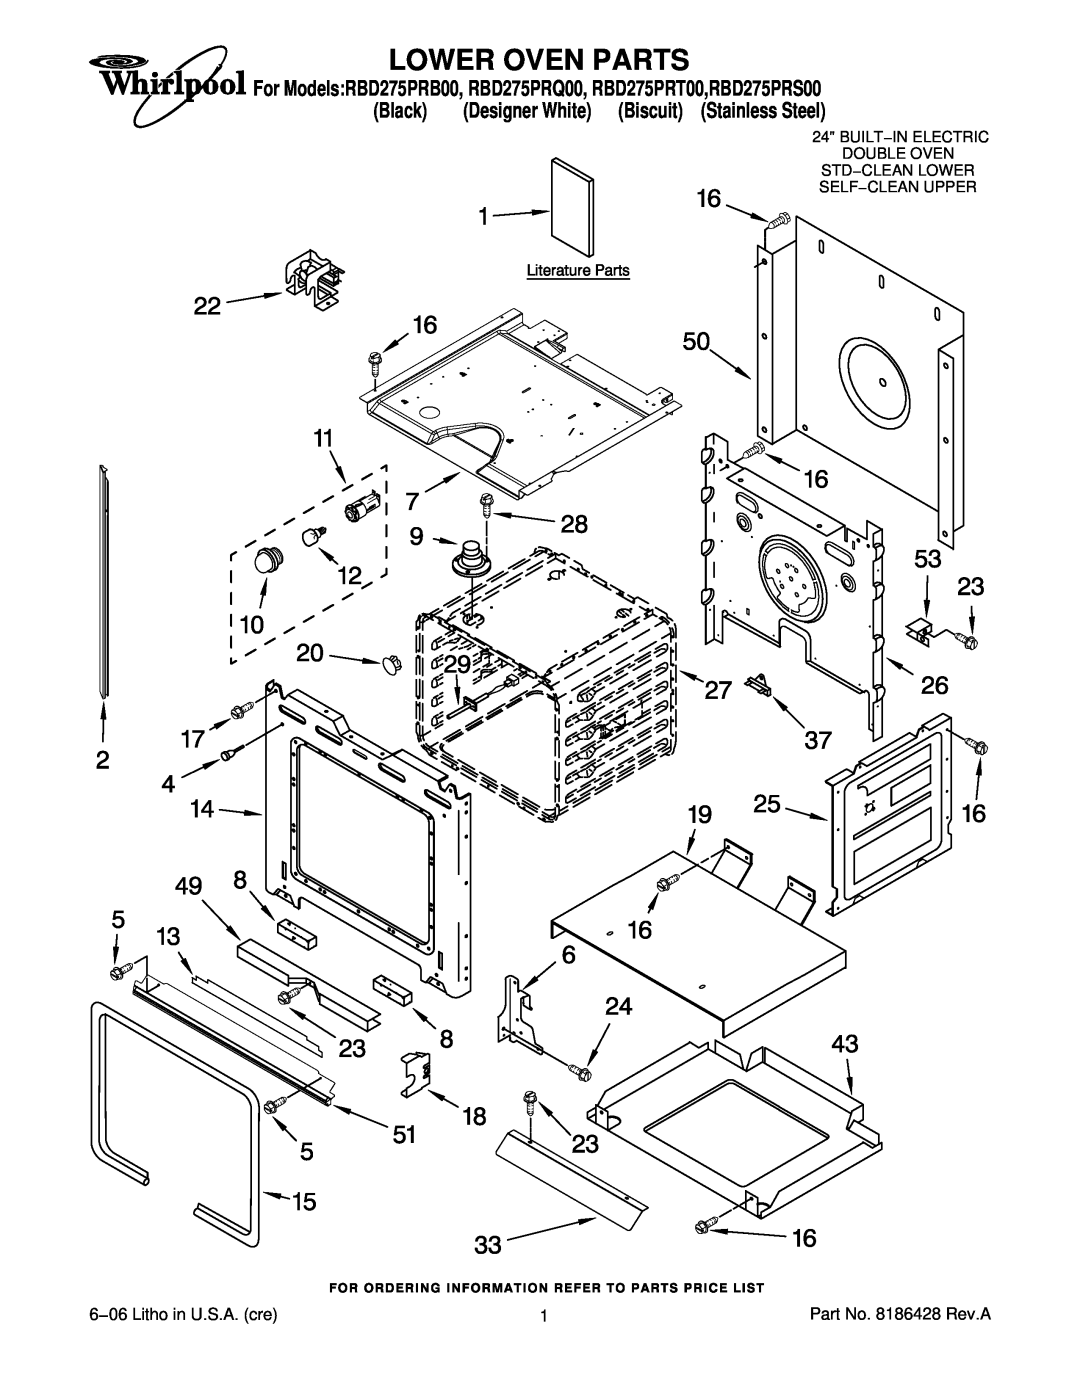 Whirlpool manual Lower Oven Parts, For ModelsRBD275PRB00, RBD275PRQ00, RBD275PRT00,RBD275PRS00, Part No. 8186428 Rev.A 